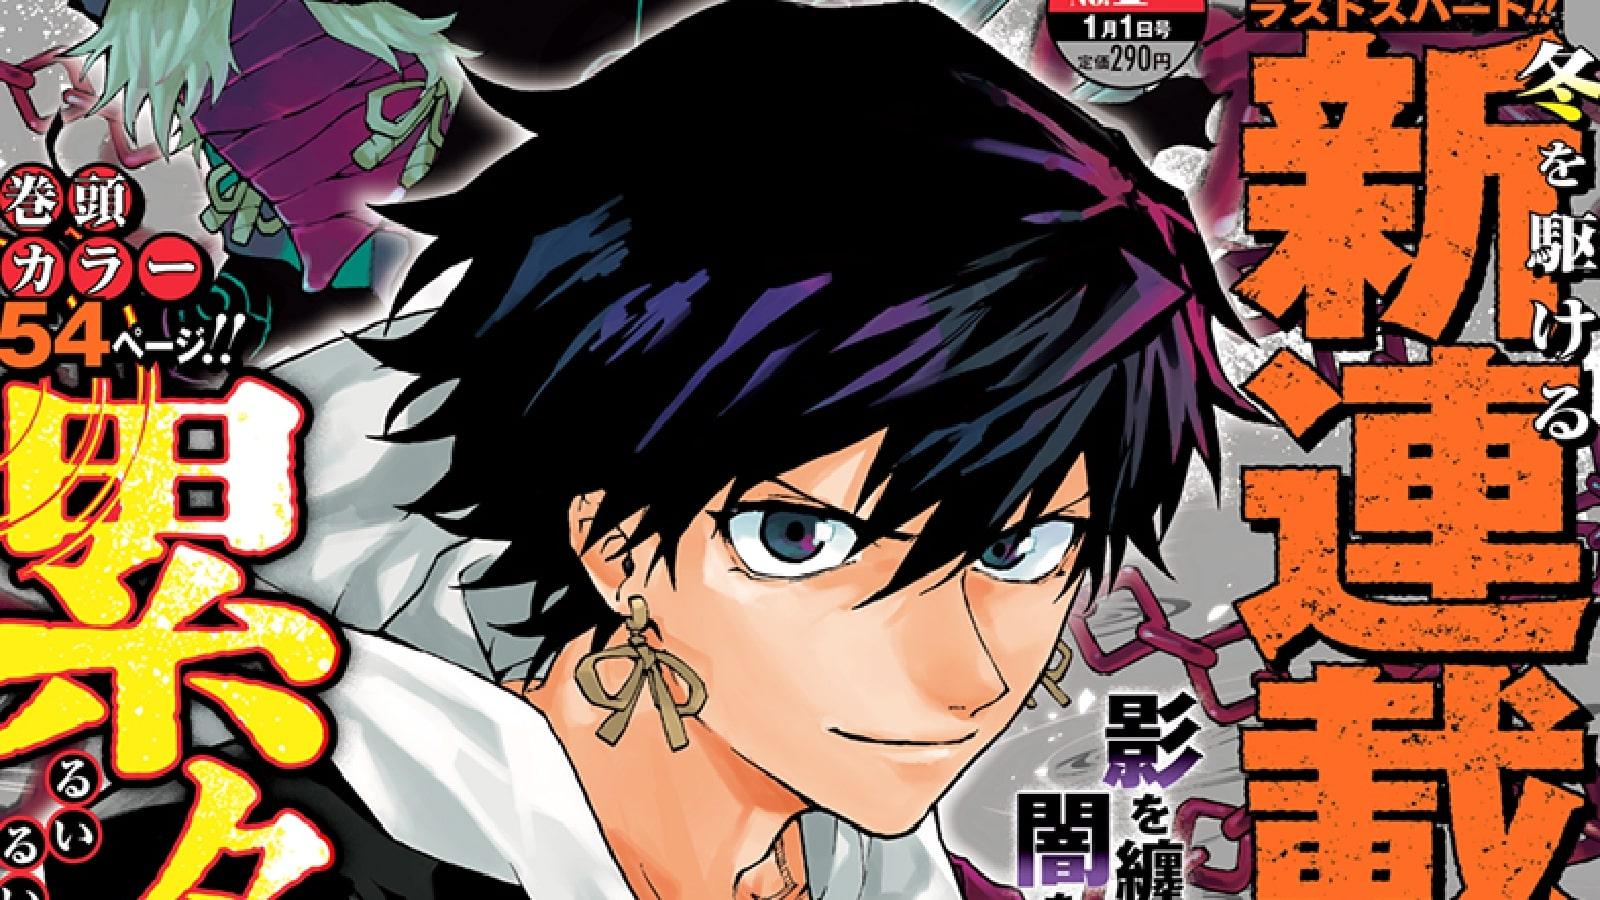 Jujutsu Kaisen manga returns to Weekly Shonen Jump after hiatus